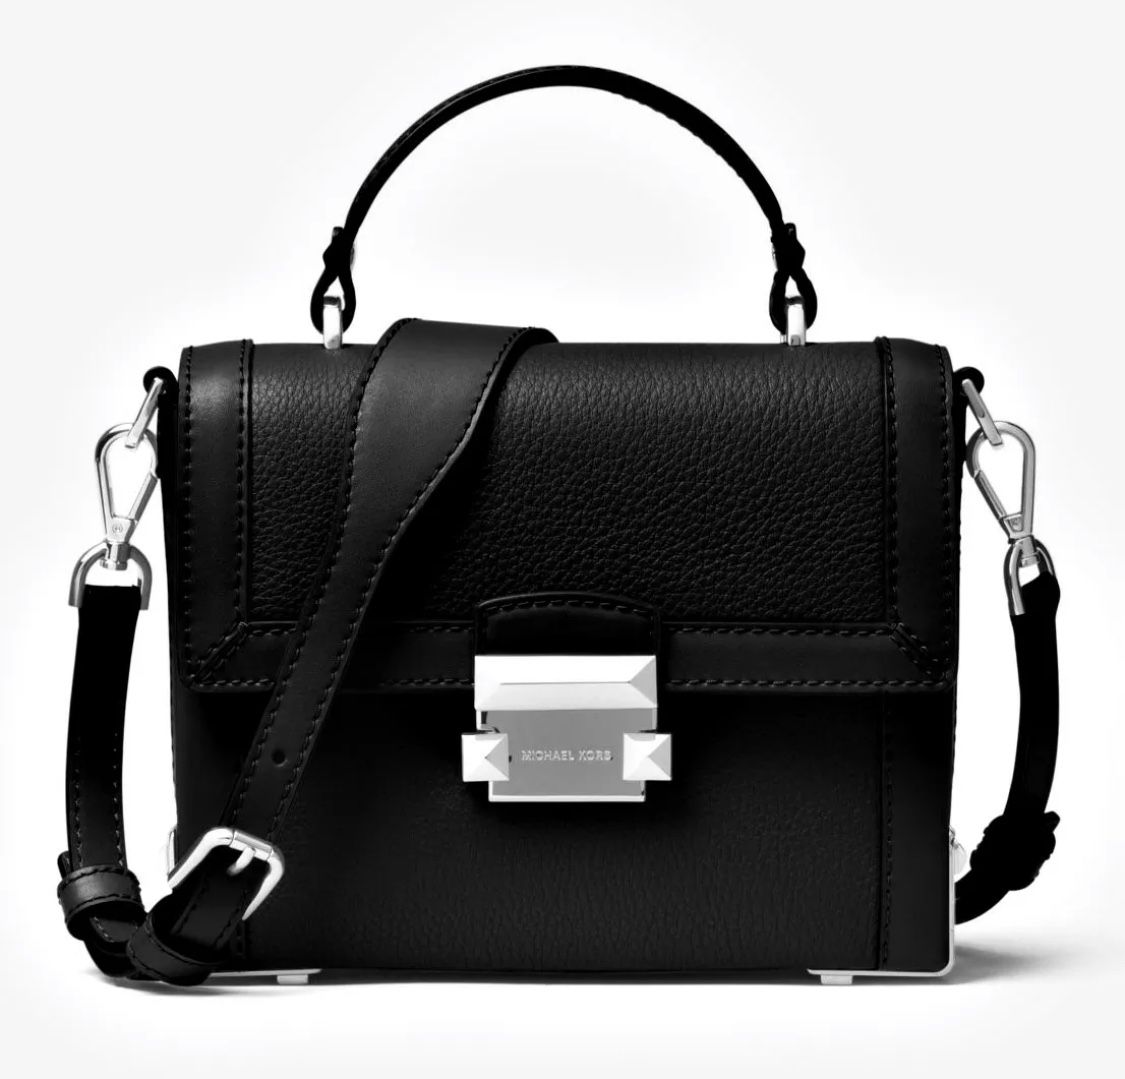 Michael Kors Jayne trunk bag handbag purse Crossbody black leather